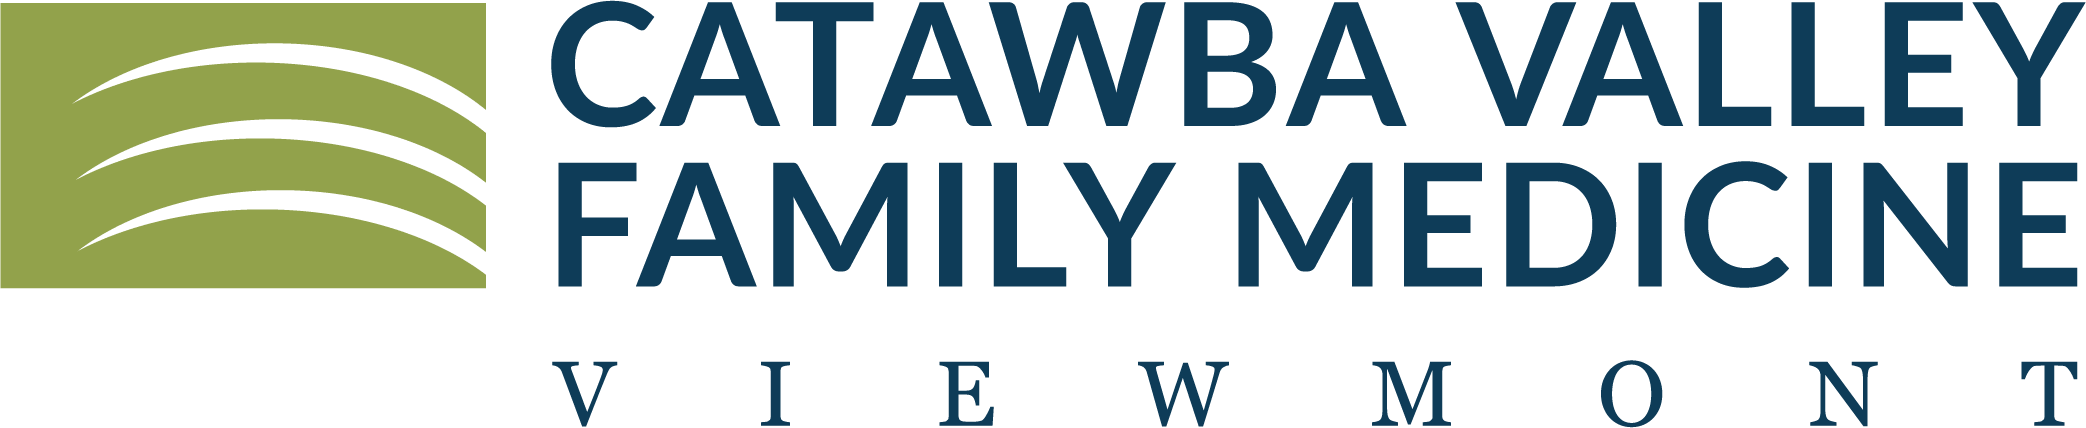 Catawba Valley Family Medicine - Viewmont